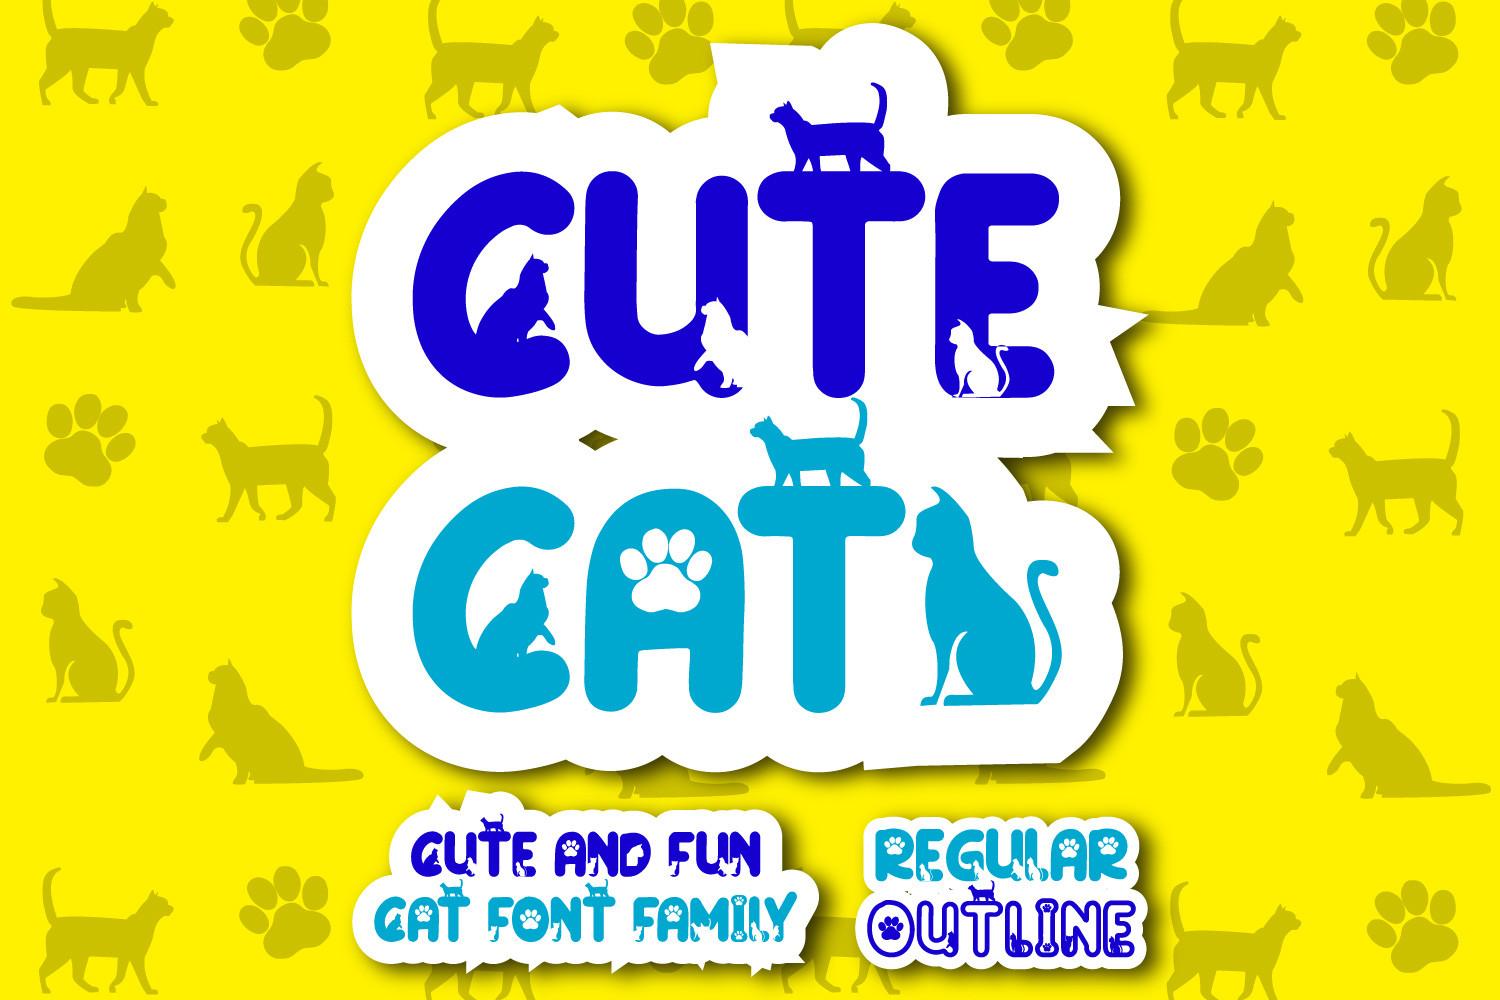 Cute Cat Font